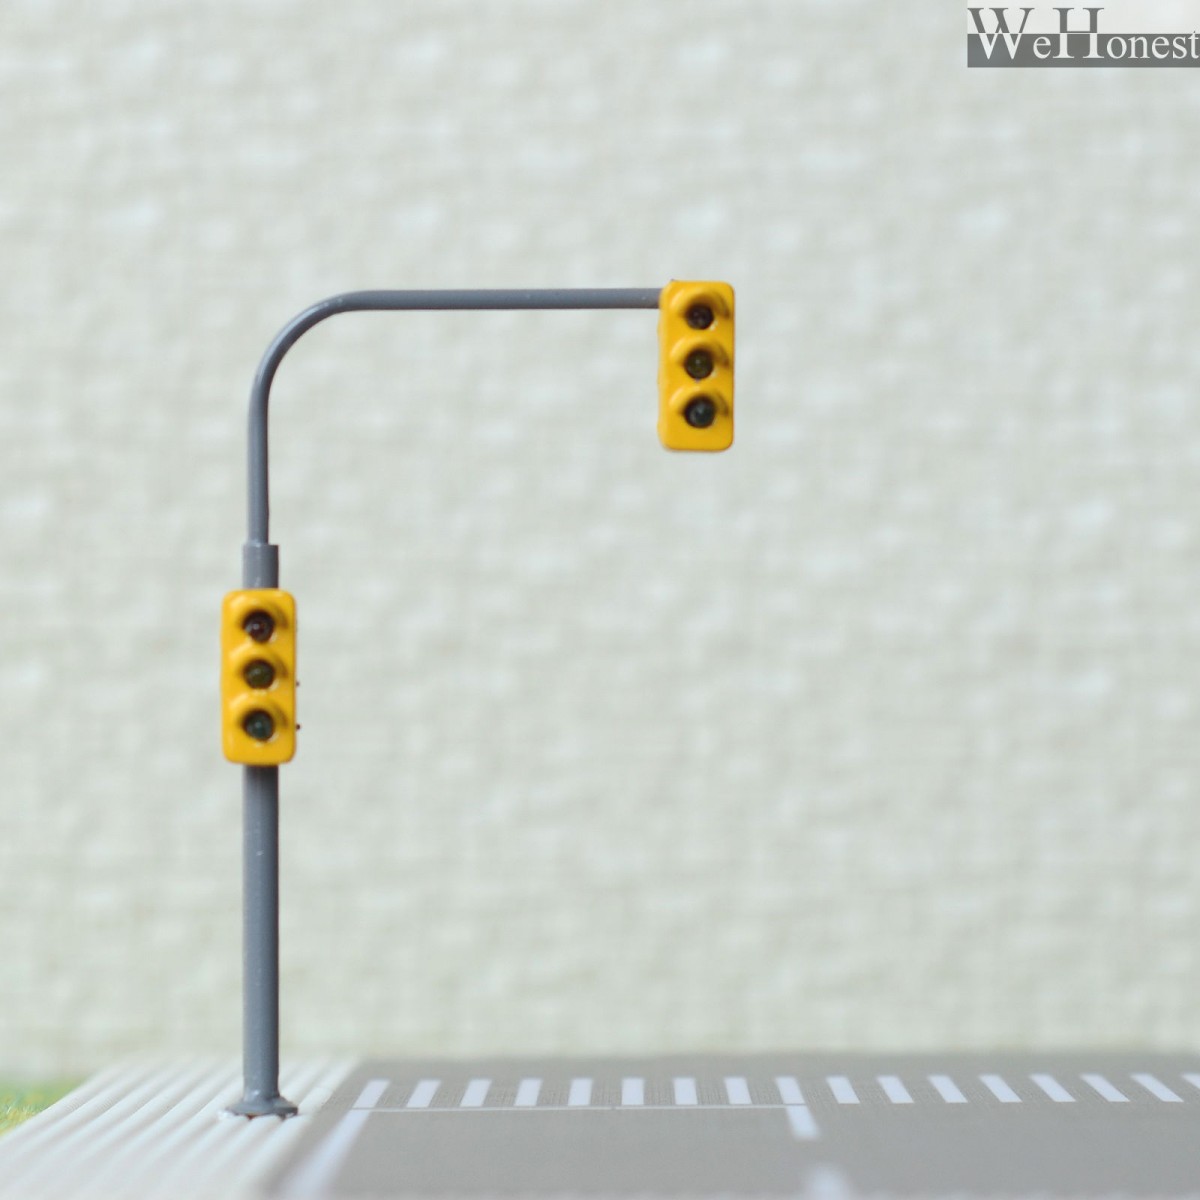 1 x traffic lights HO OO crossing walk model train led street signals #B3C3LHOR